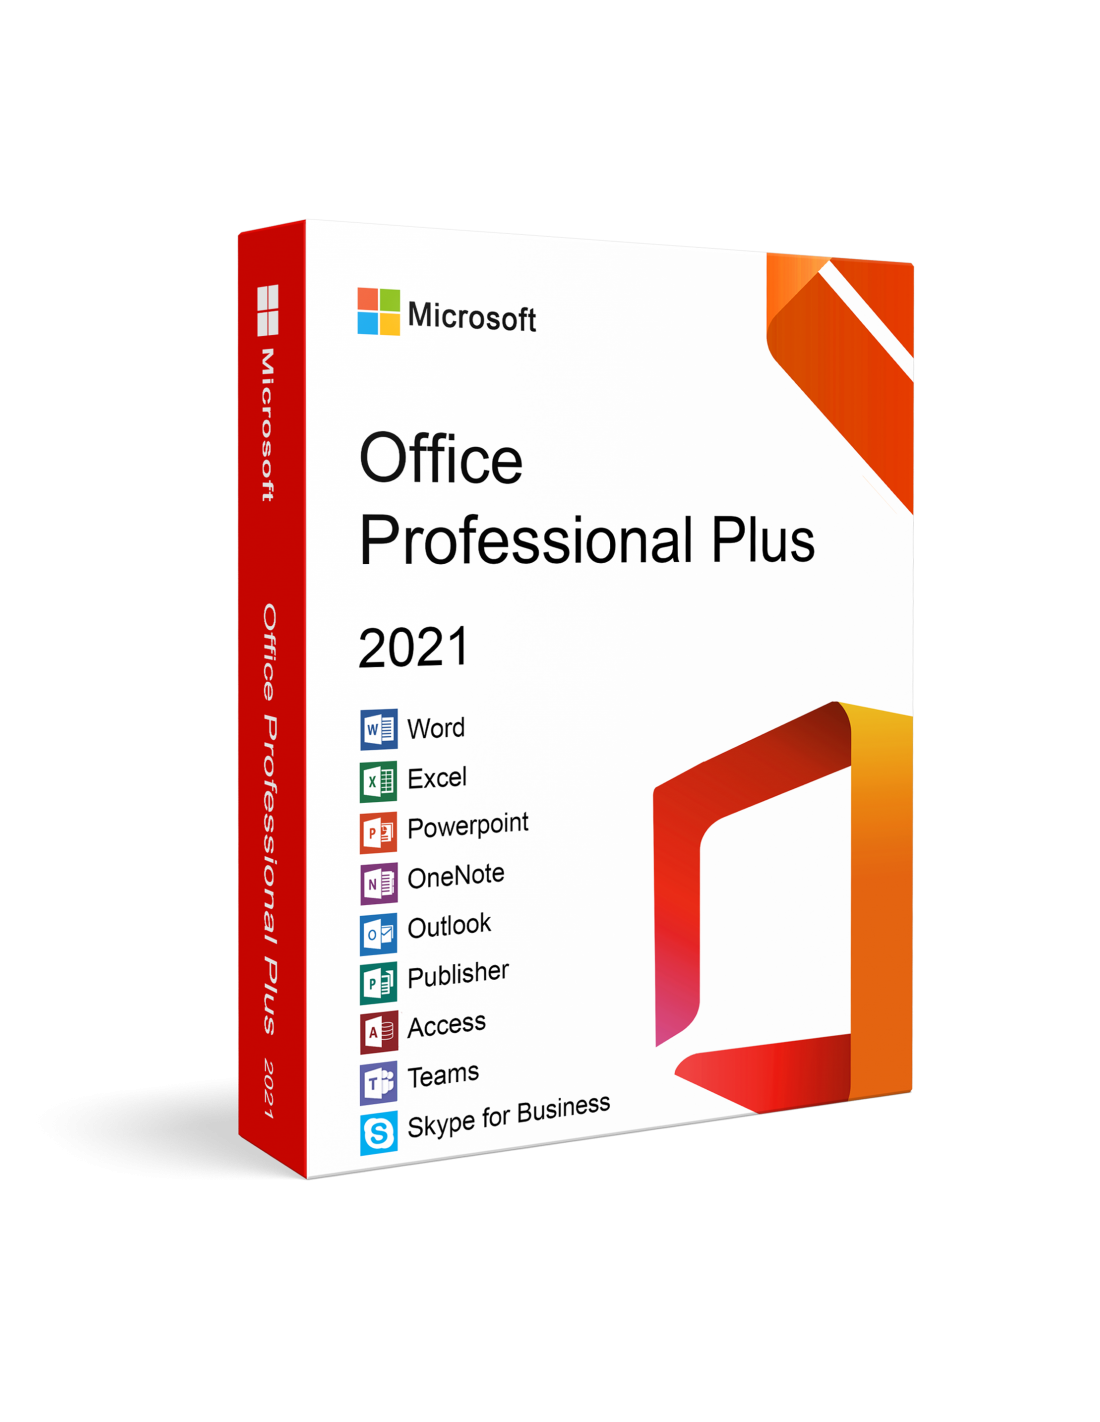 Office Professional 2021 for Windows - PC周辺機器